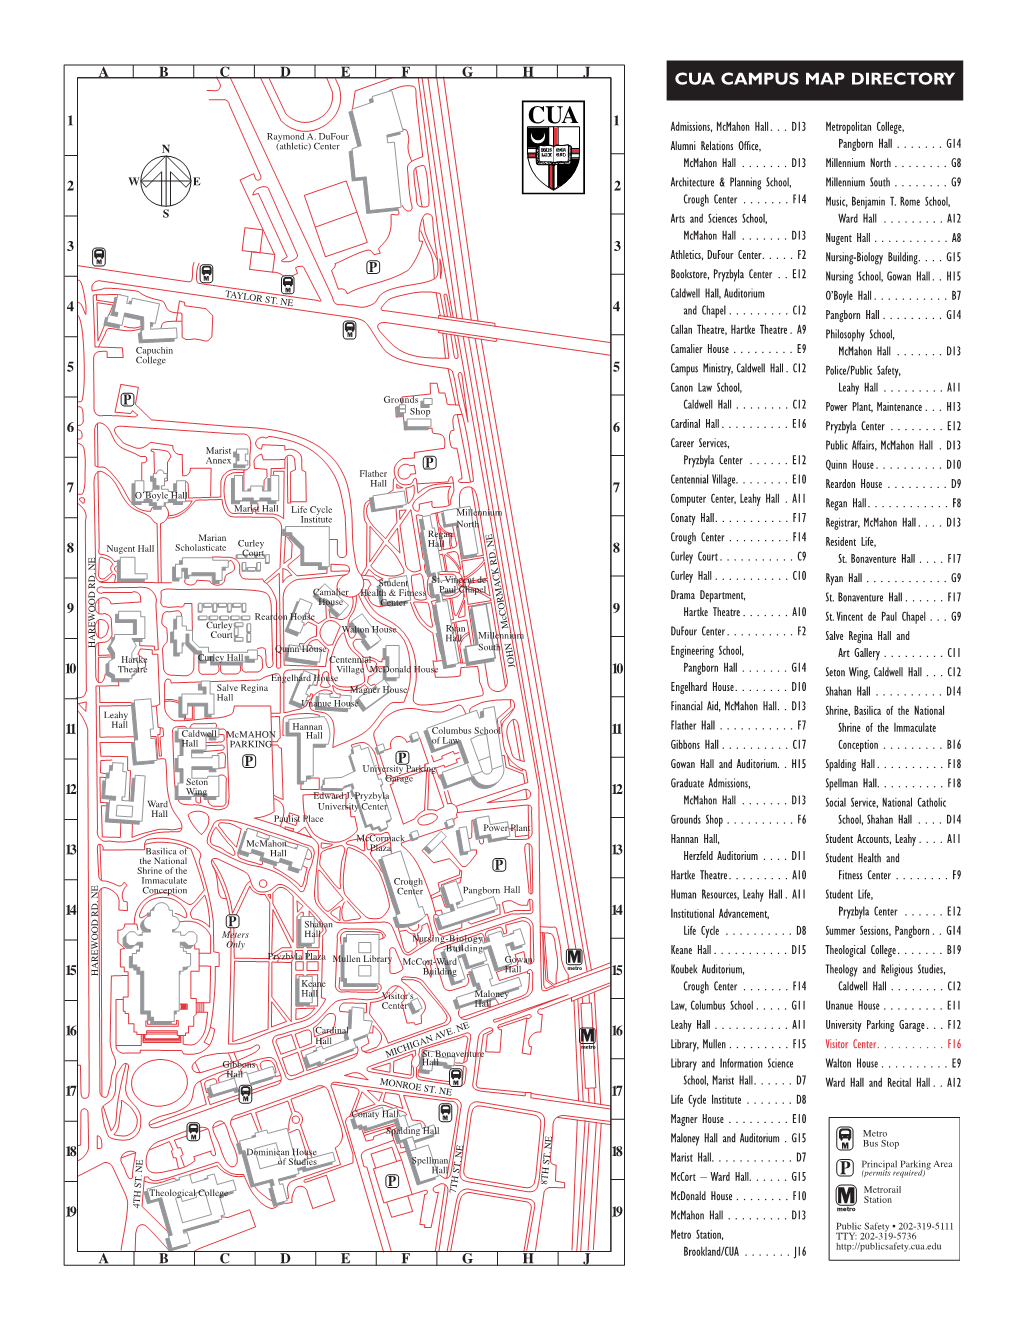 Catholic University of America Campus Map Directory